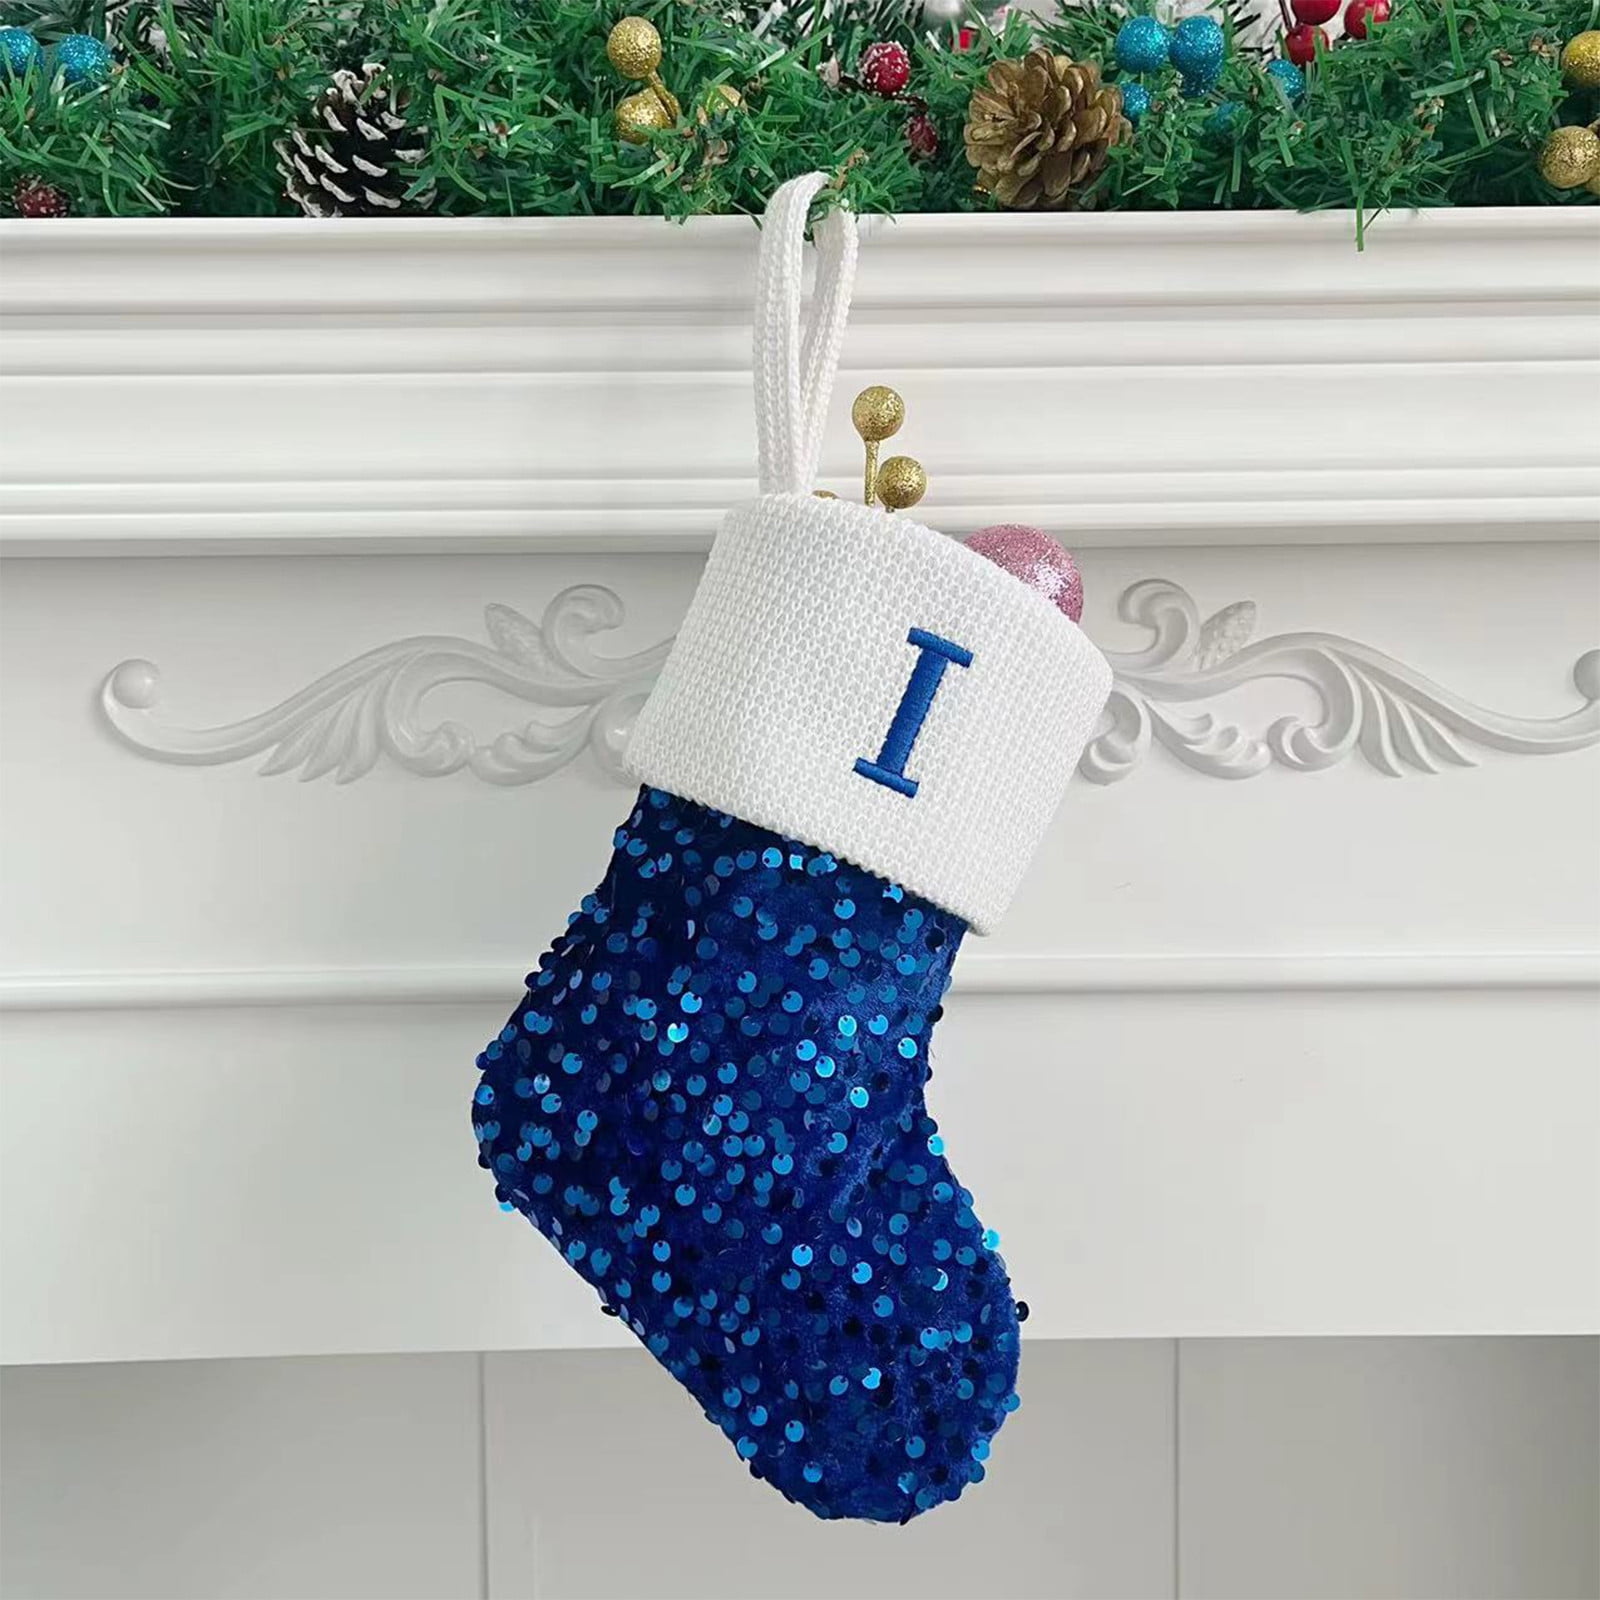 21x6.5 - YOU PICK - SFERRA Needlepoint Christmas Stockings BLUE